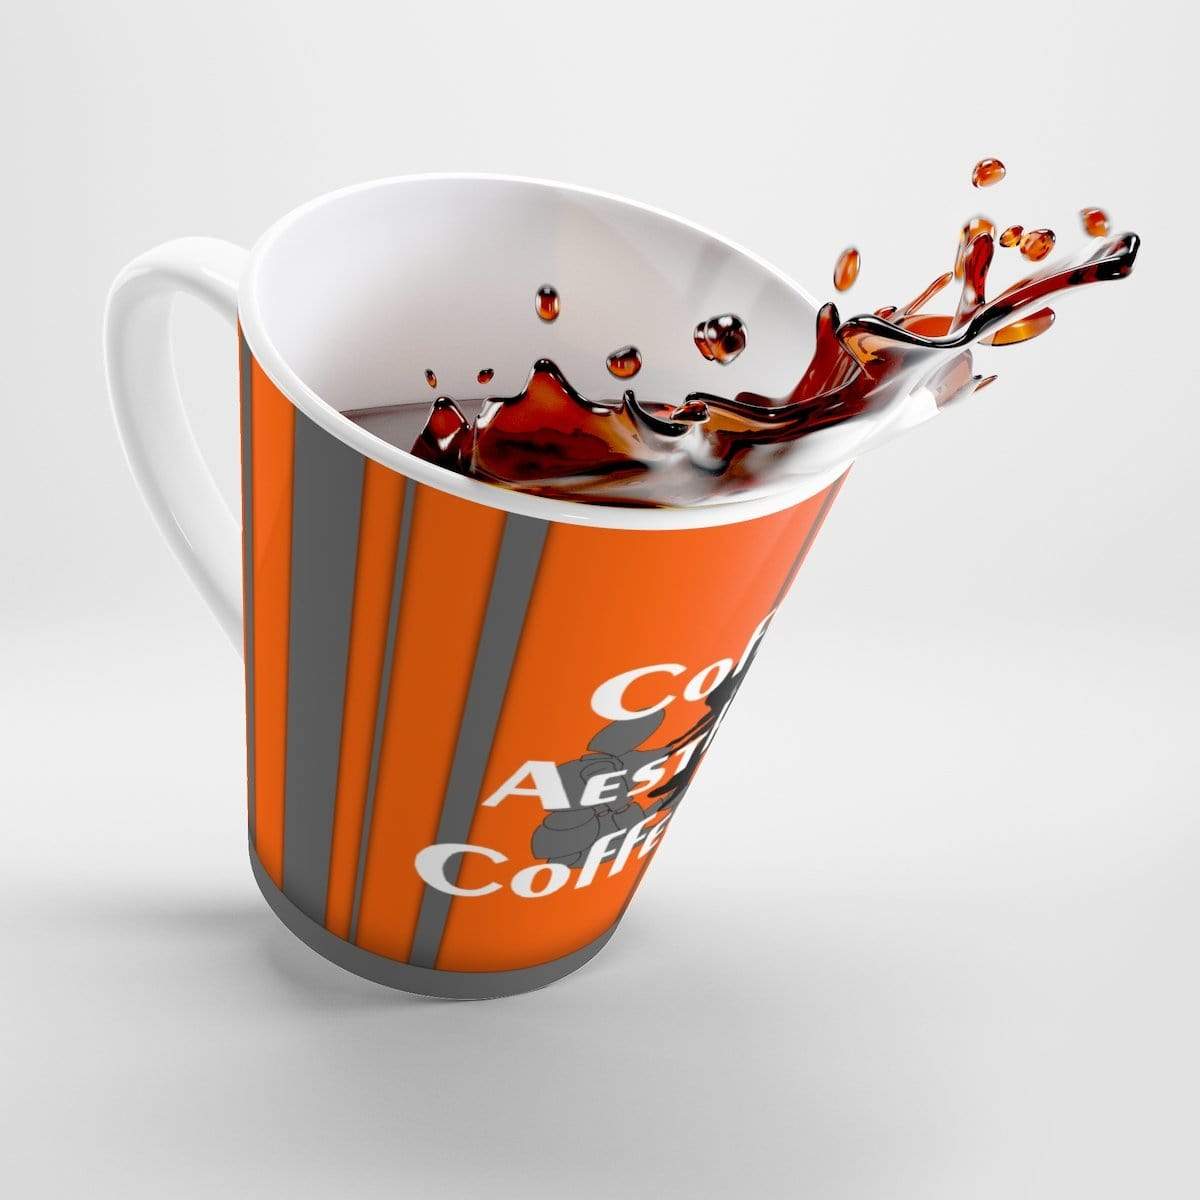 Coffee Aesthetic Coffee Co. Mug 12oz Coffee-Aesthetic.com Big Orange-Grey Latte mug